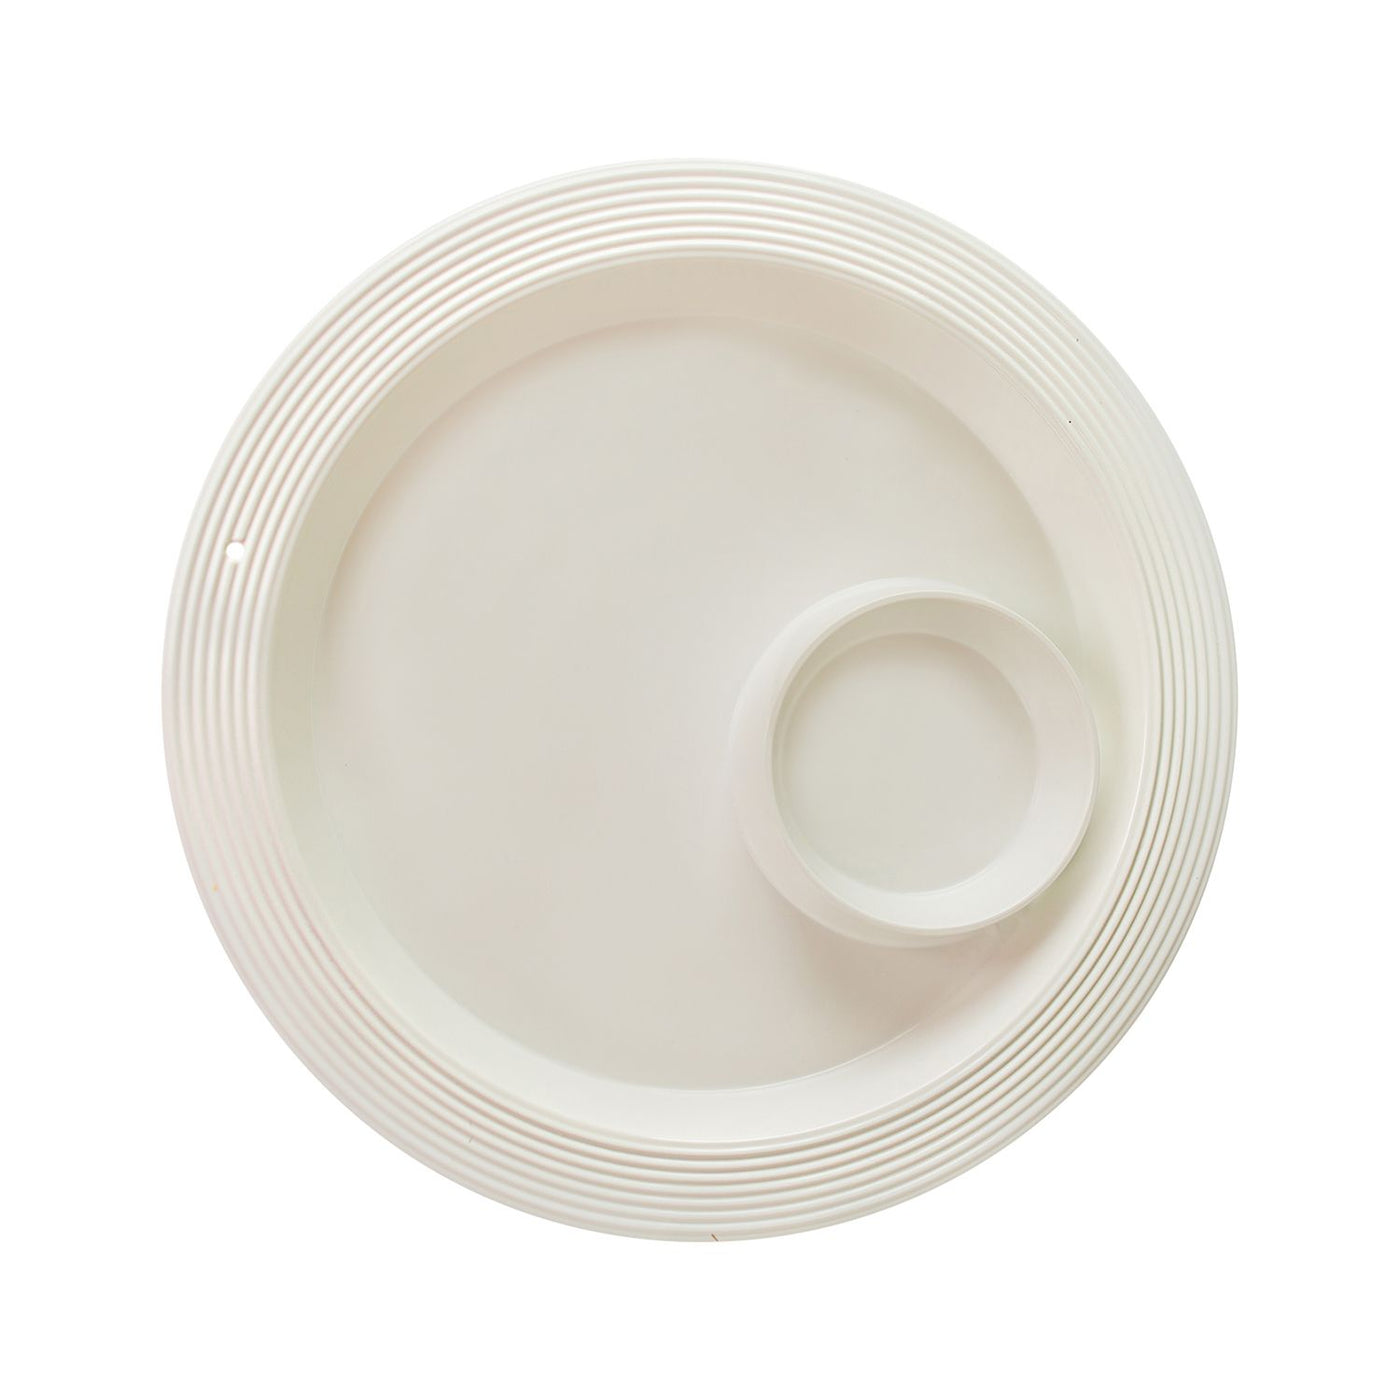 White melamine chip and dip plate